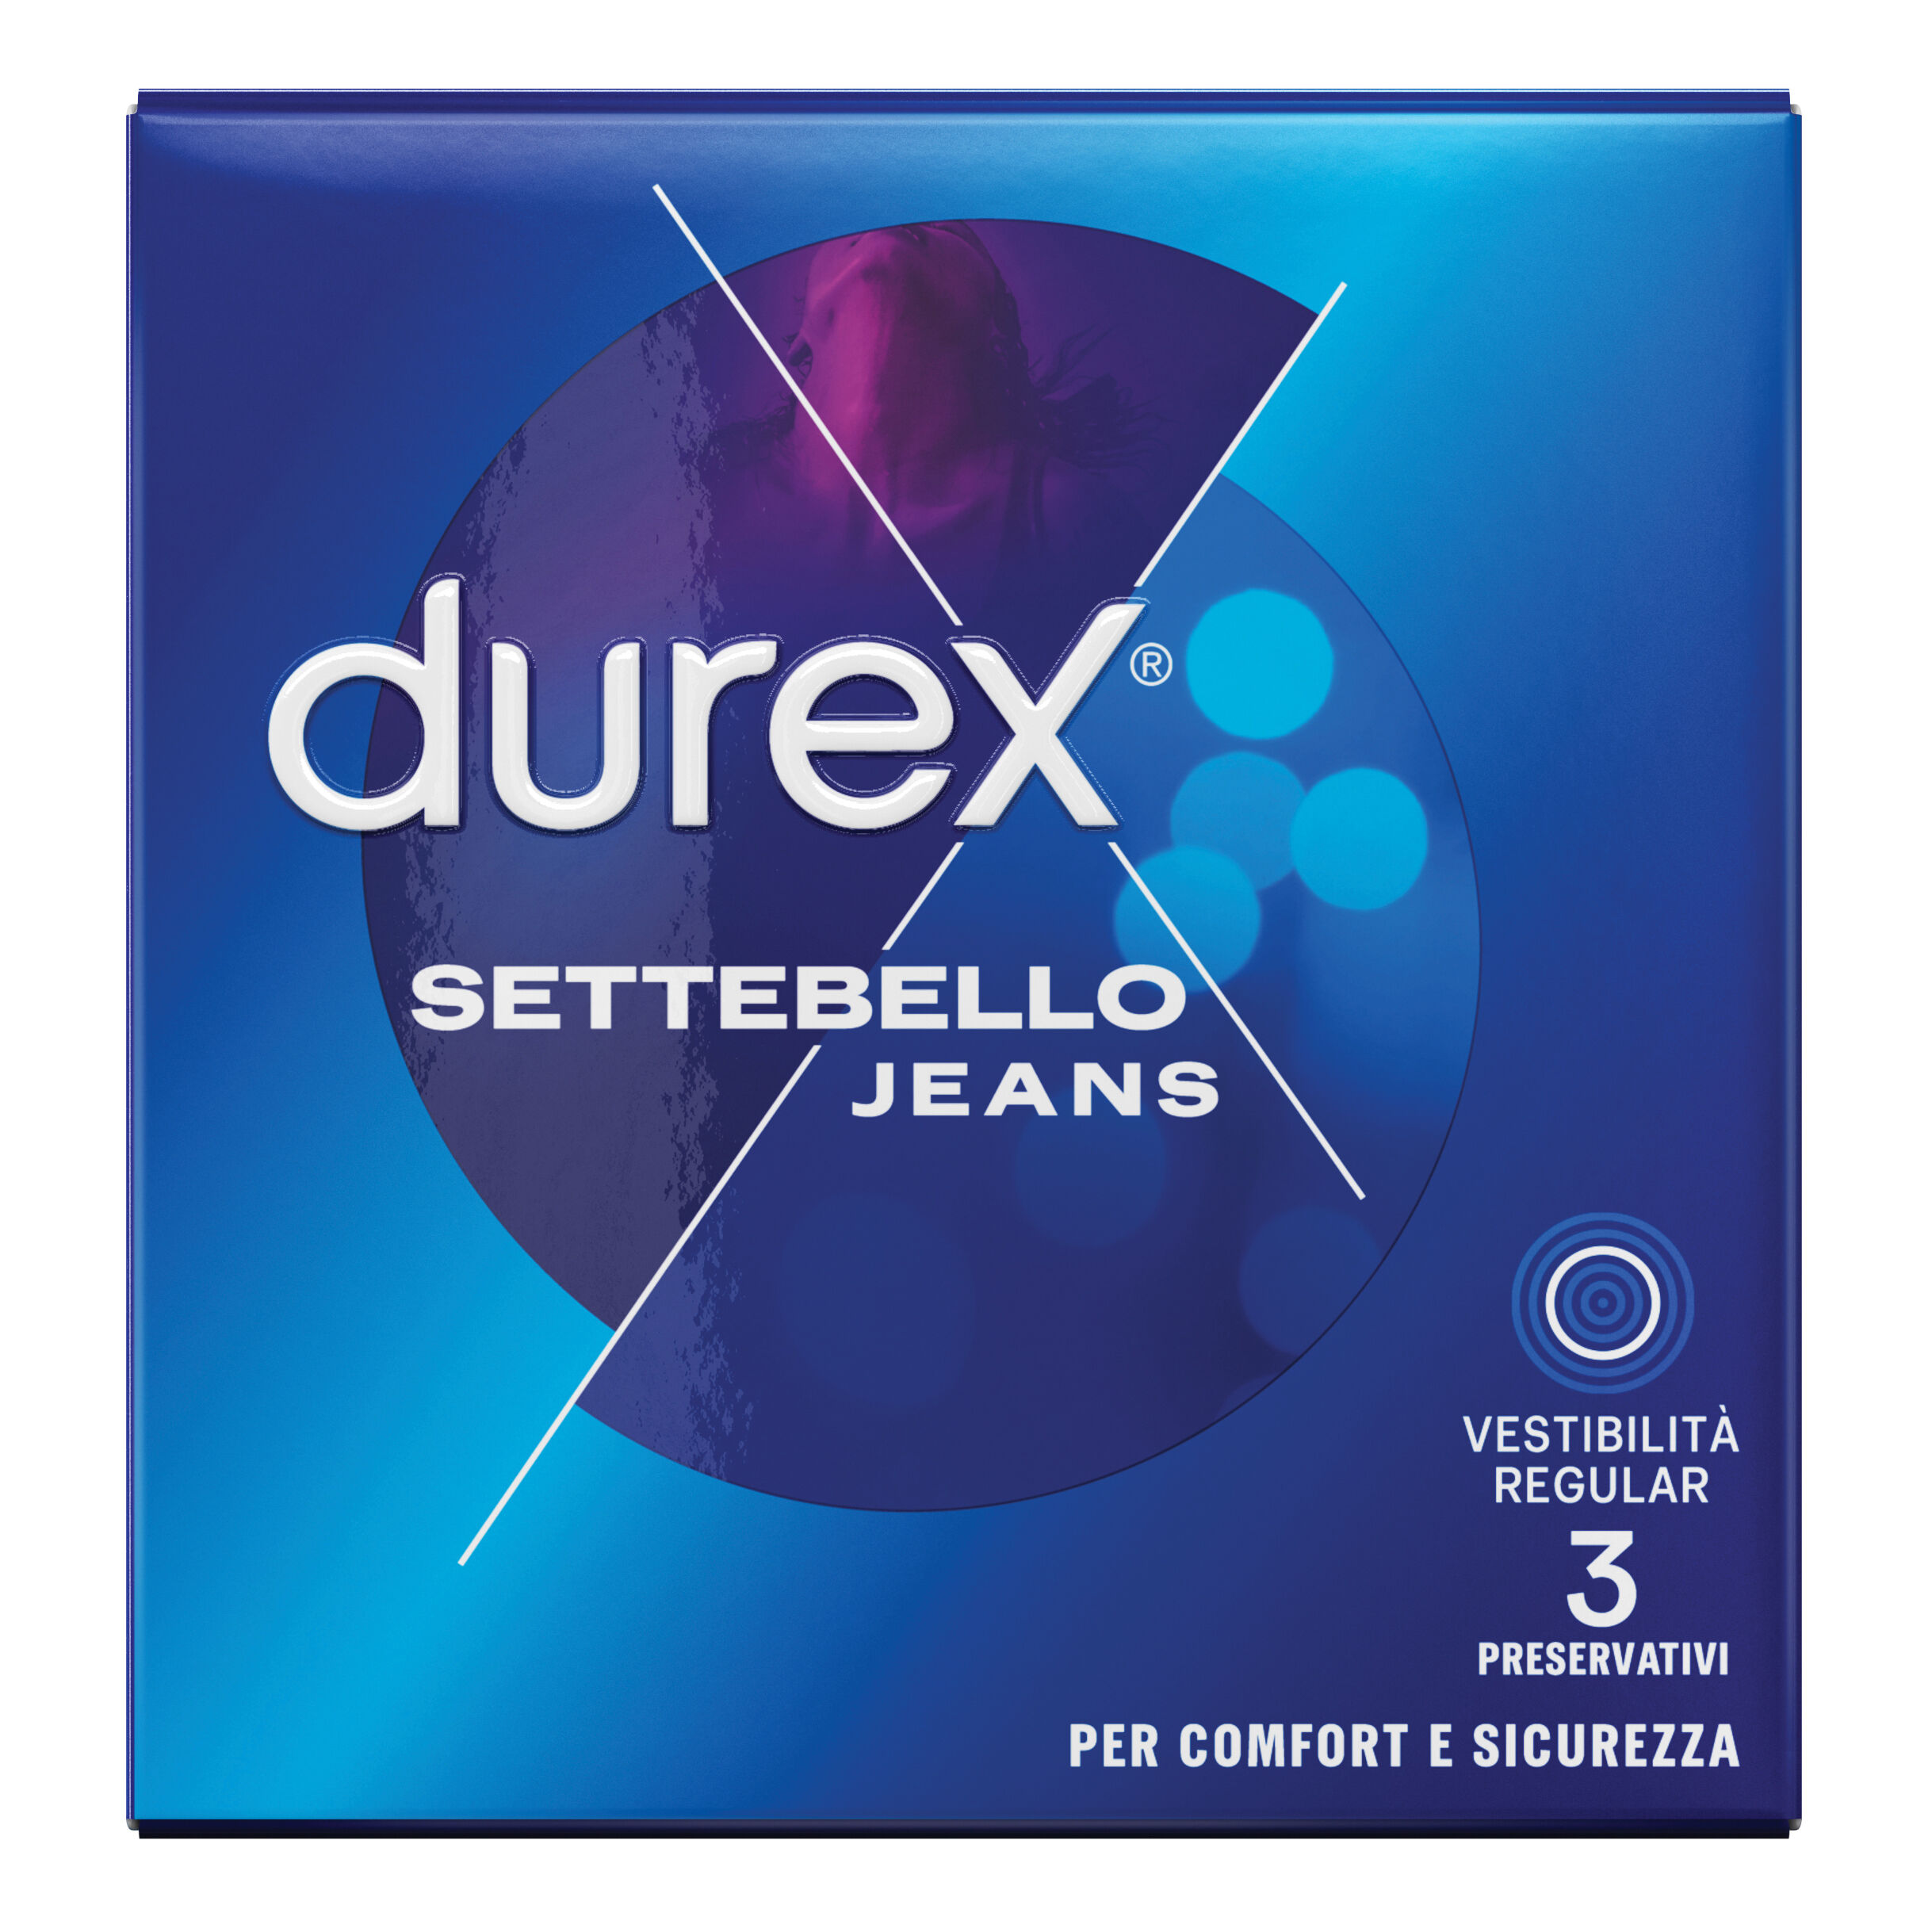 Durex Profilattico settebello jeans 3 pezzi